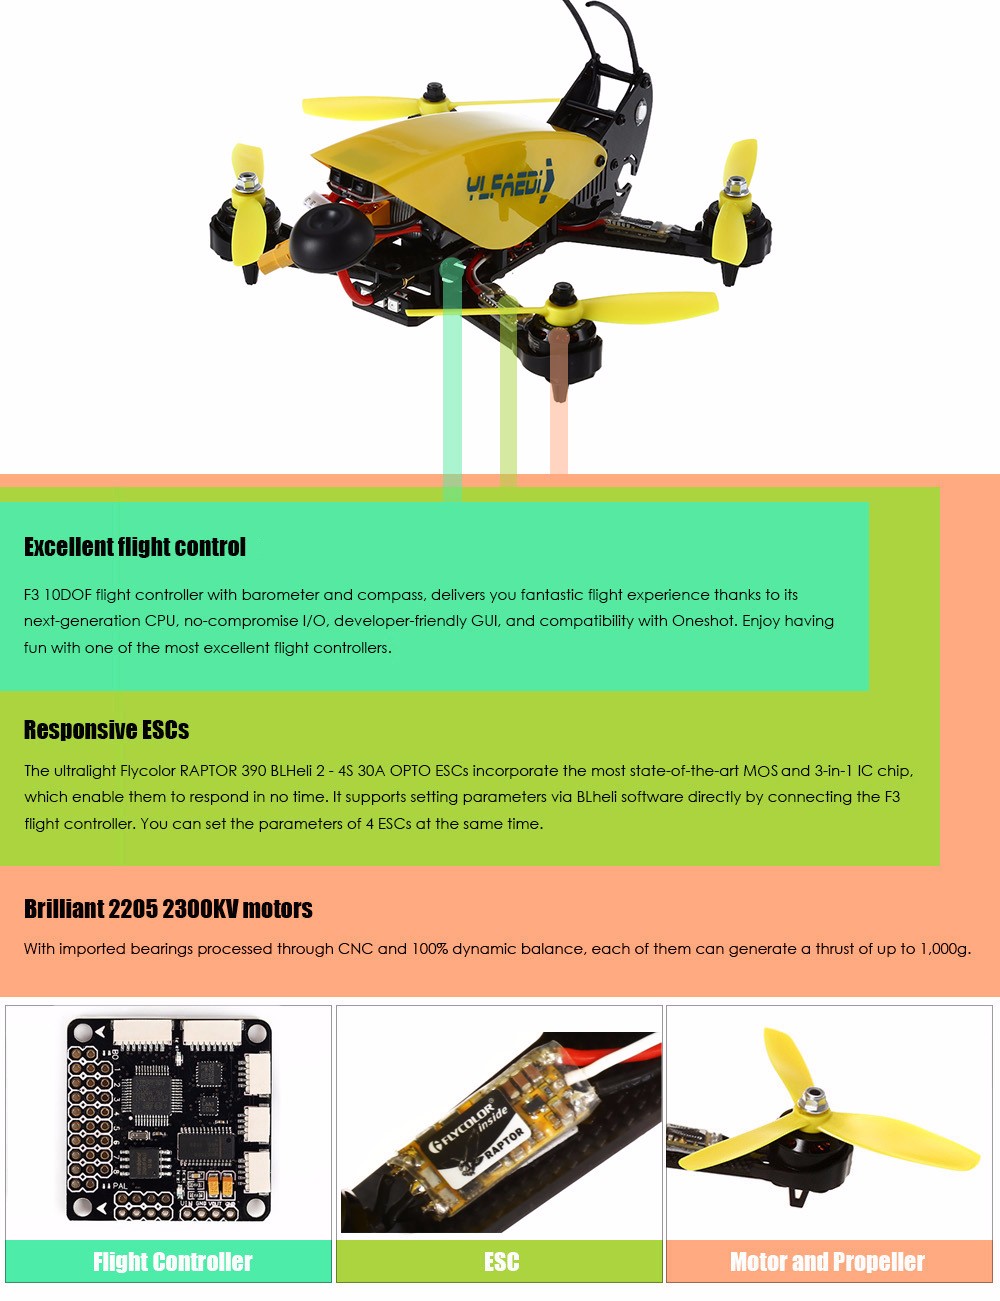 Ideafly Grasshopper F210 5.8G FPV 230km/h Professional Racing Drone - ARF - Yellow